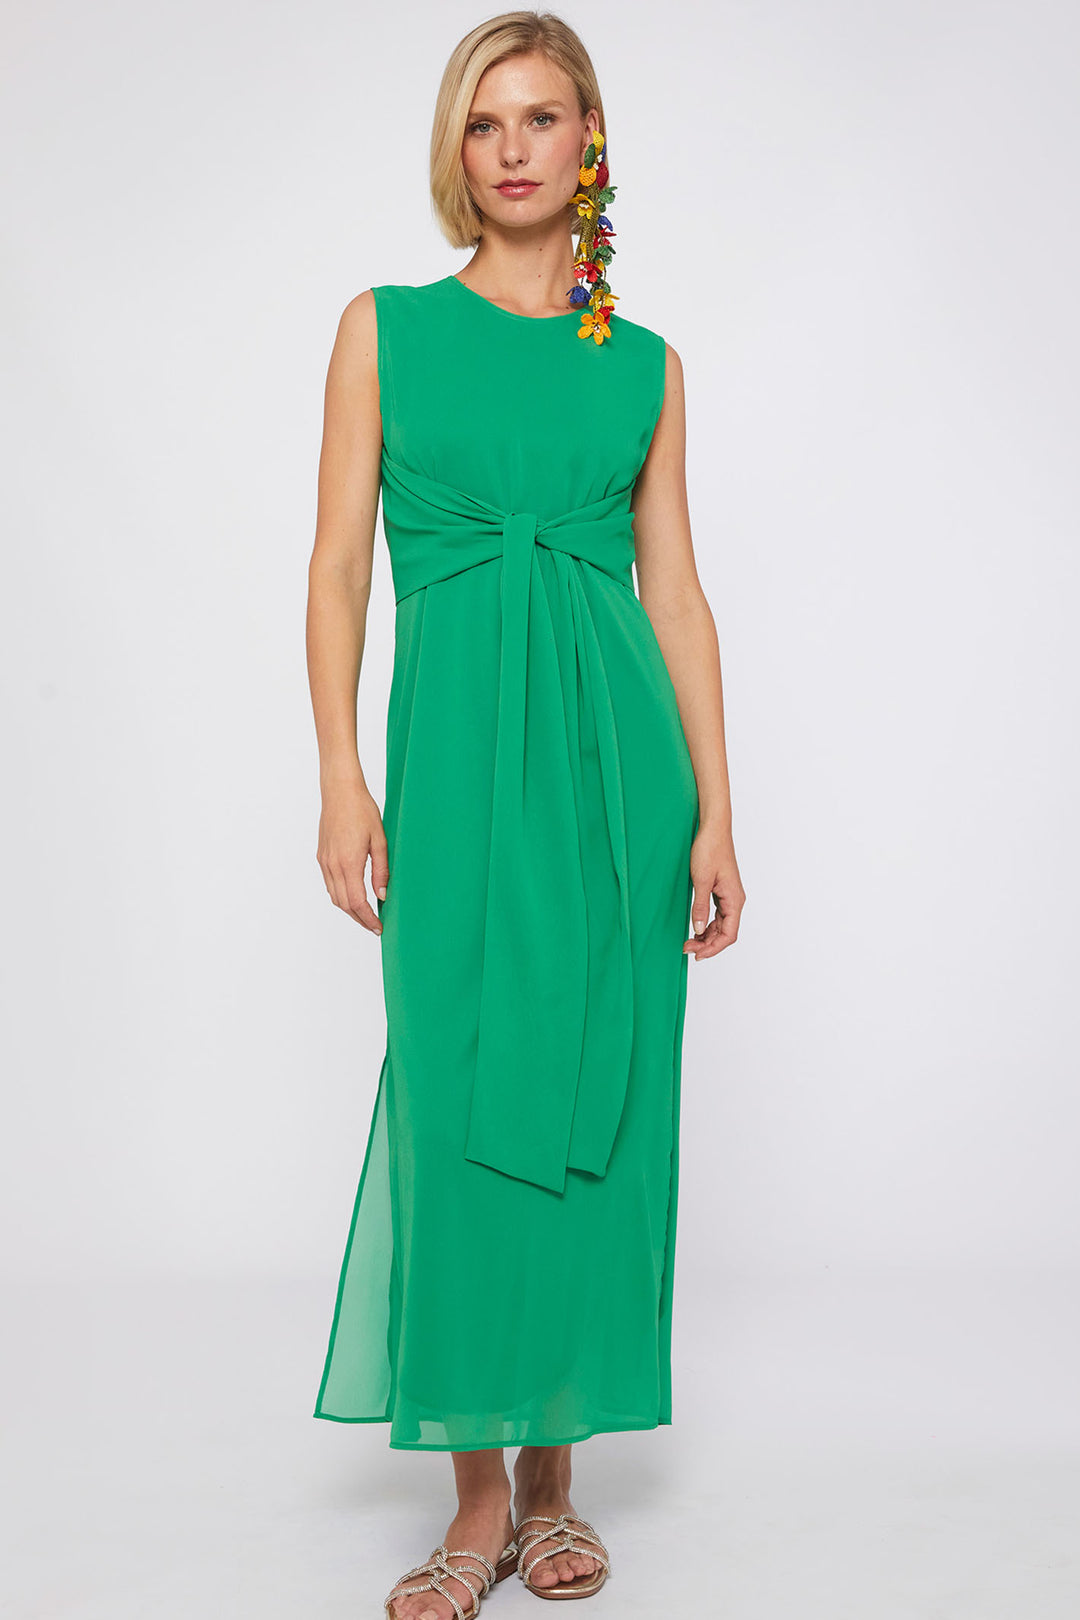 Vilagallo 31116 Green Multi Look Sleeveless Dress - Olivia Grace Fashion